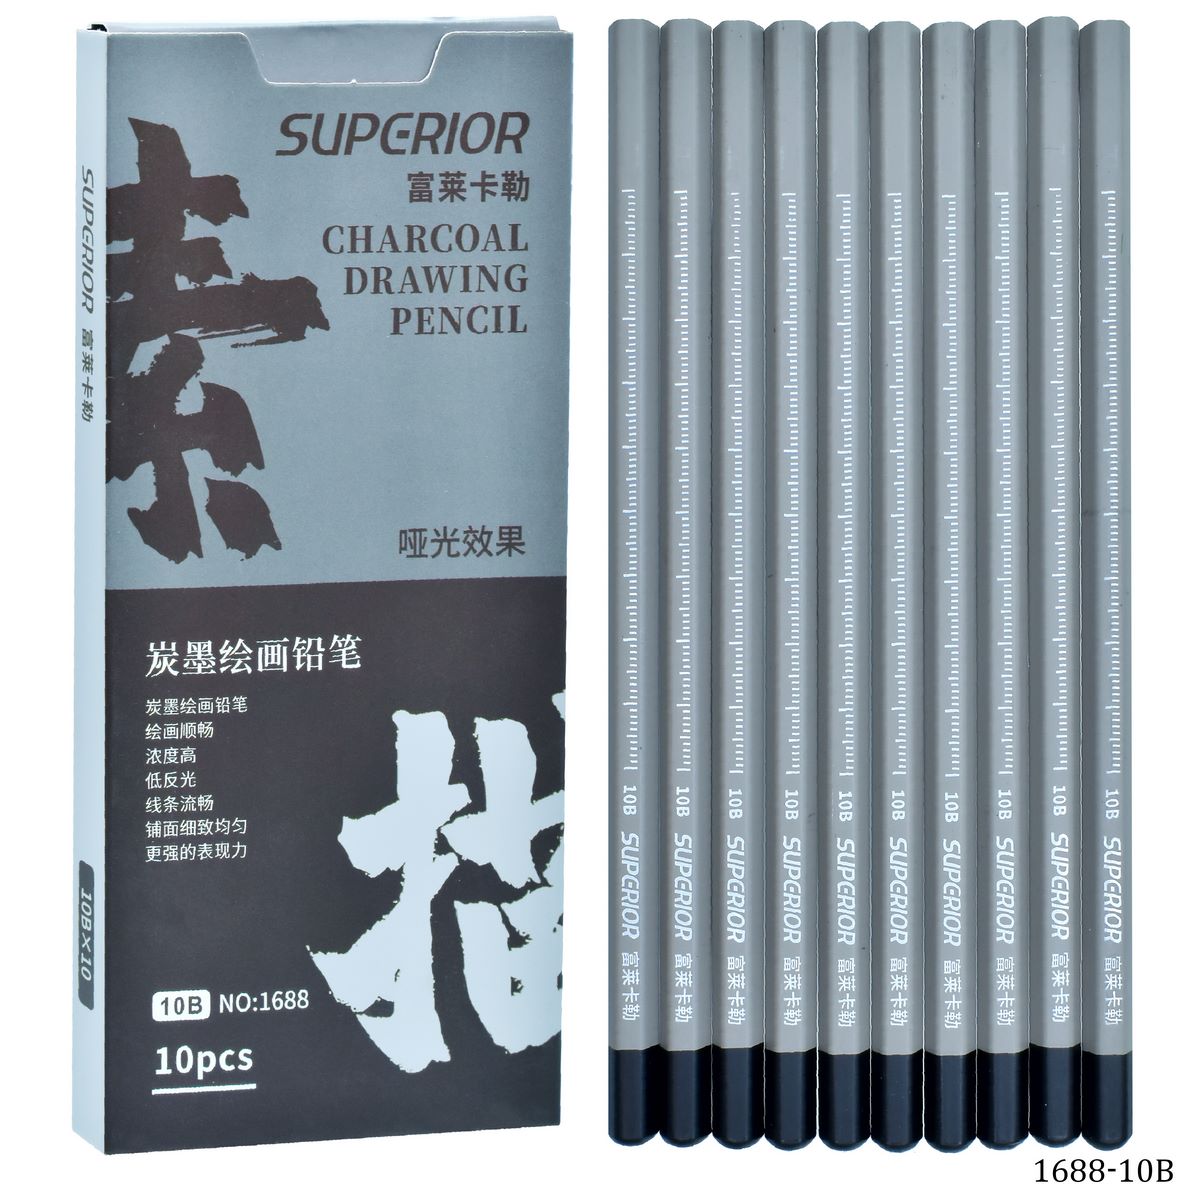 Superior Drawing Pencil 10Pcs 1688-10B | CIY